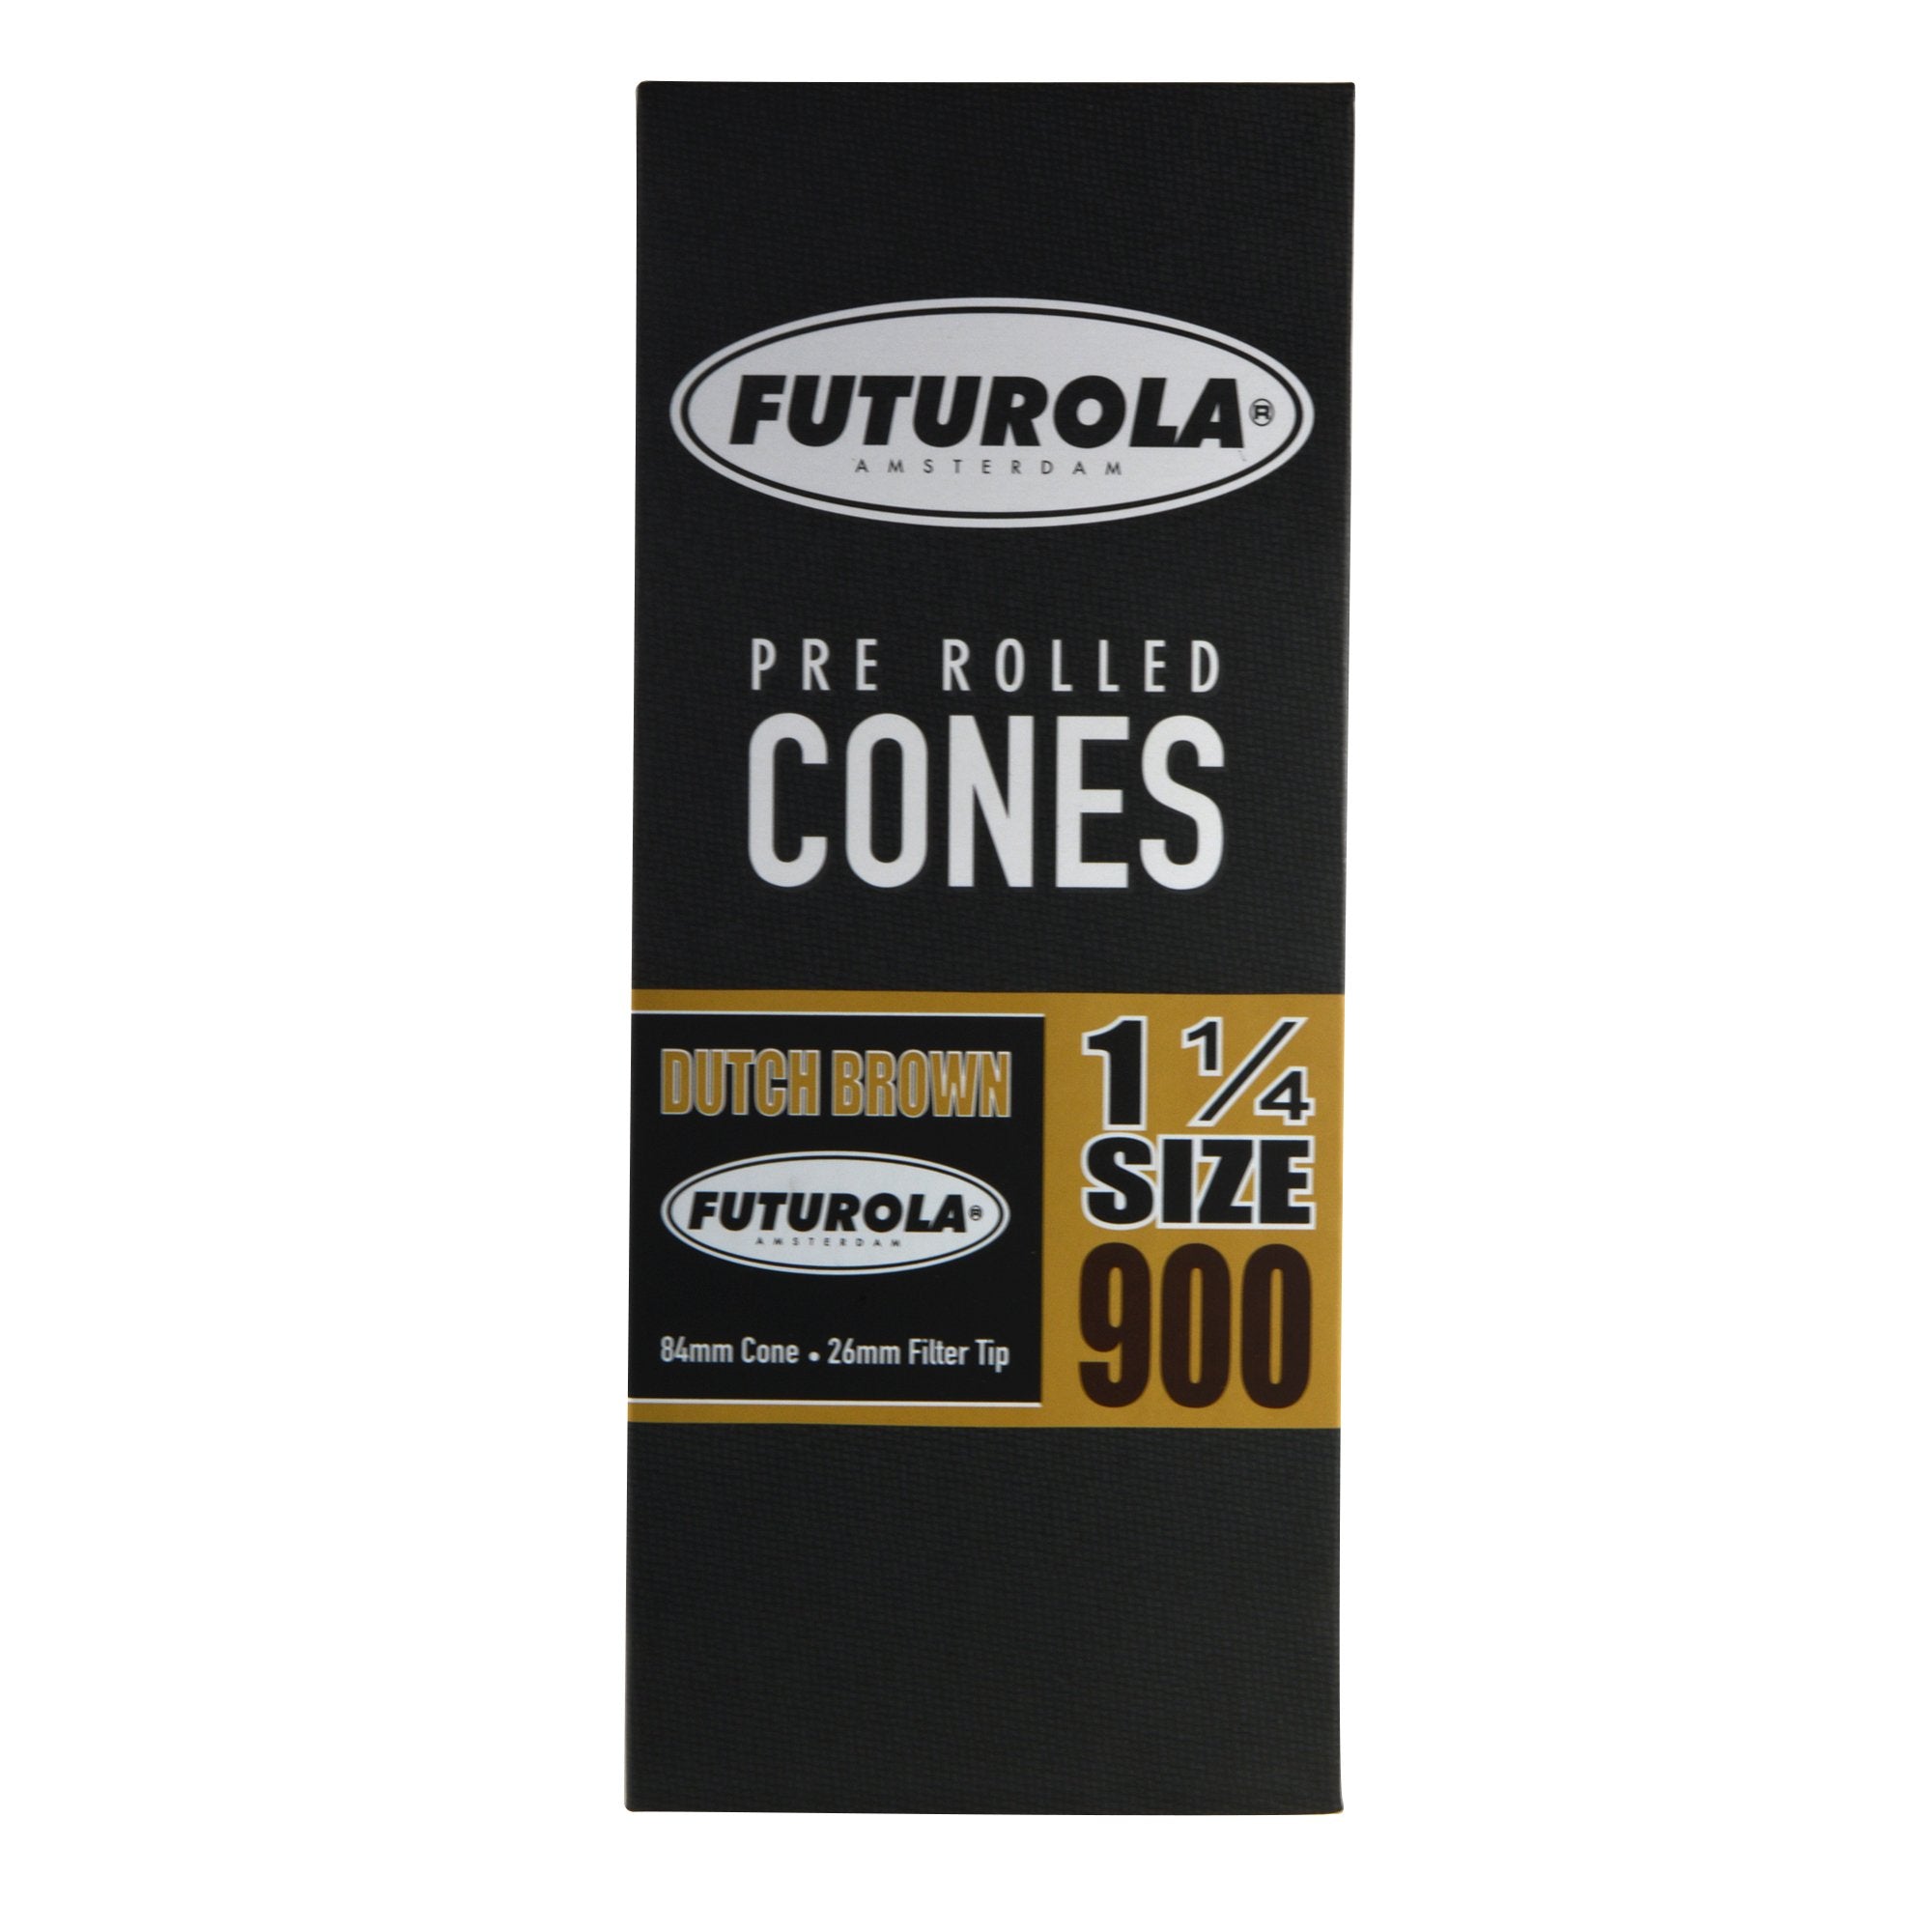 FUTUROLA | 1 1/4 Size Pre-Rolled Cones | 84mm - Dutch Brown Paper - 900 Count - 3